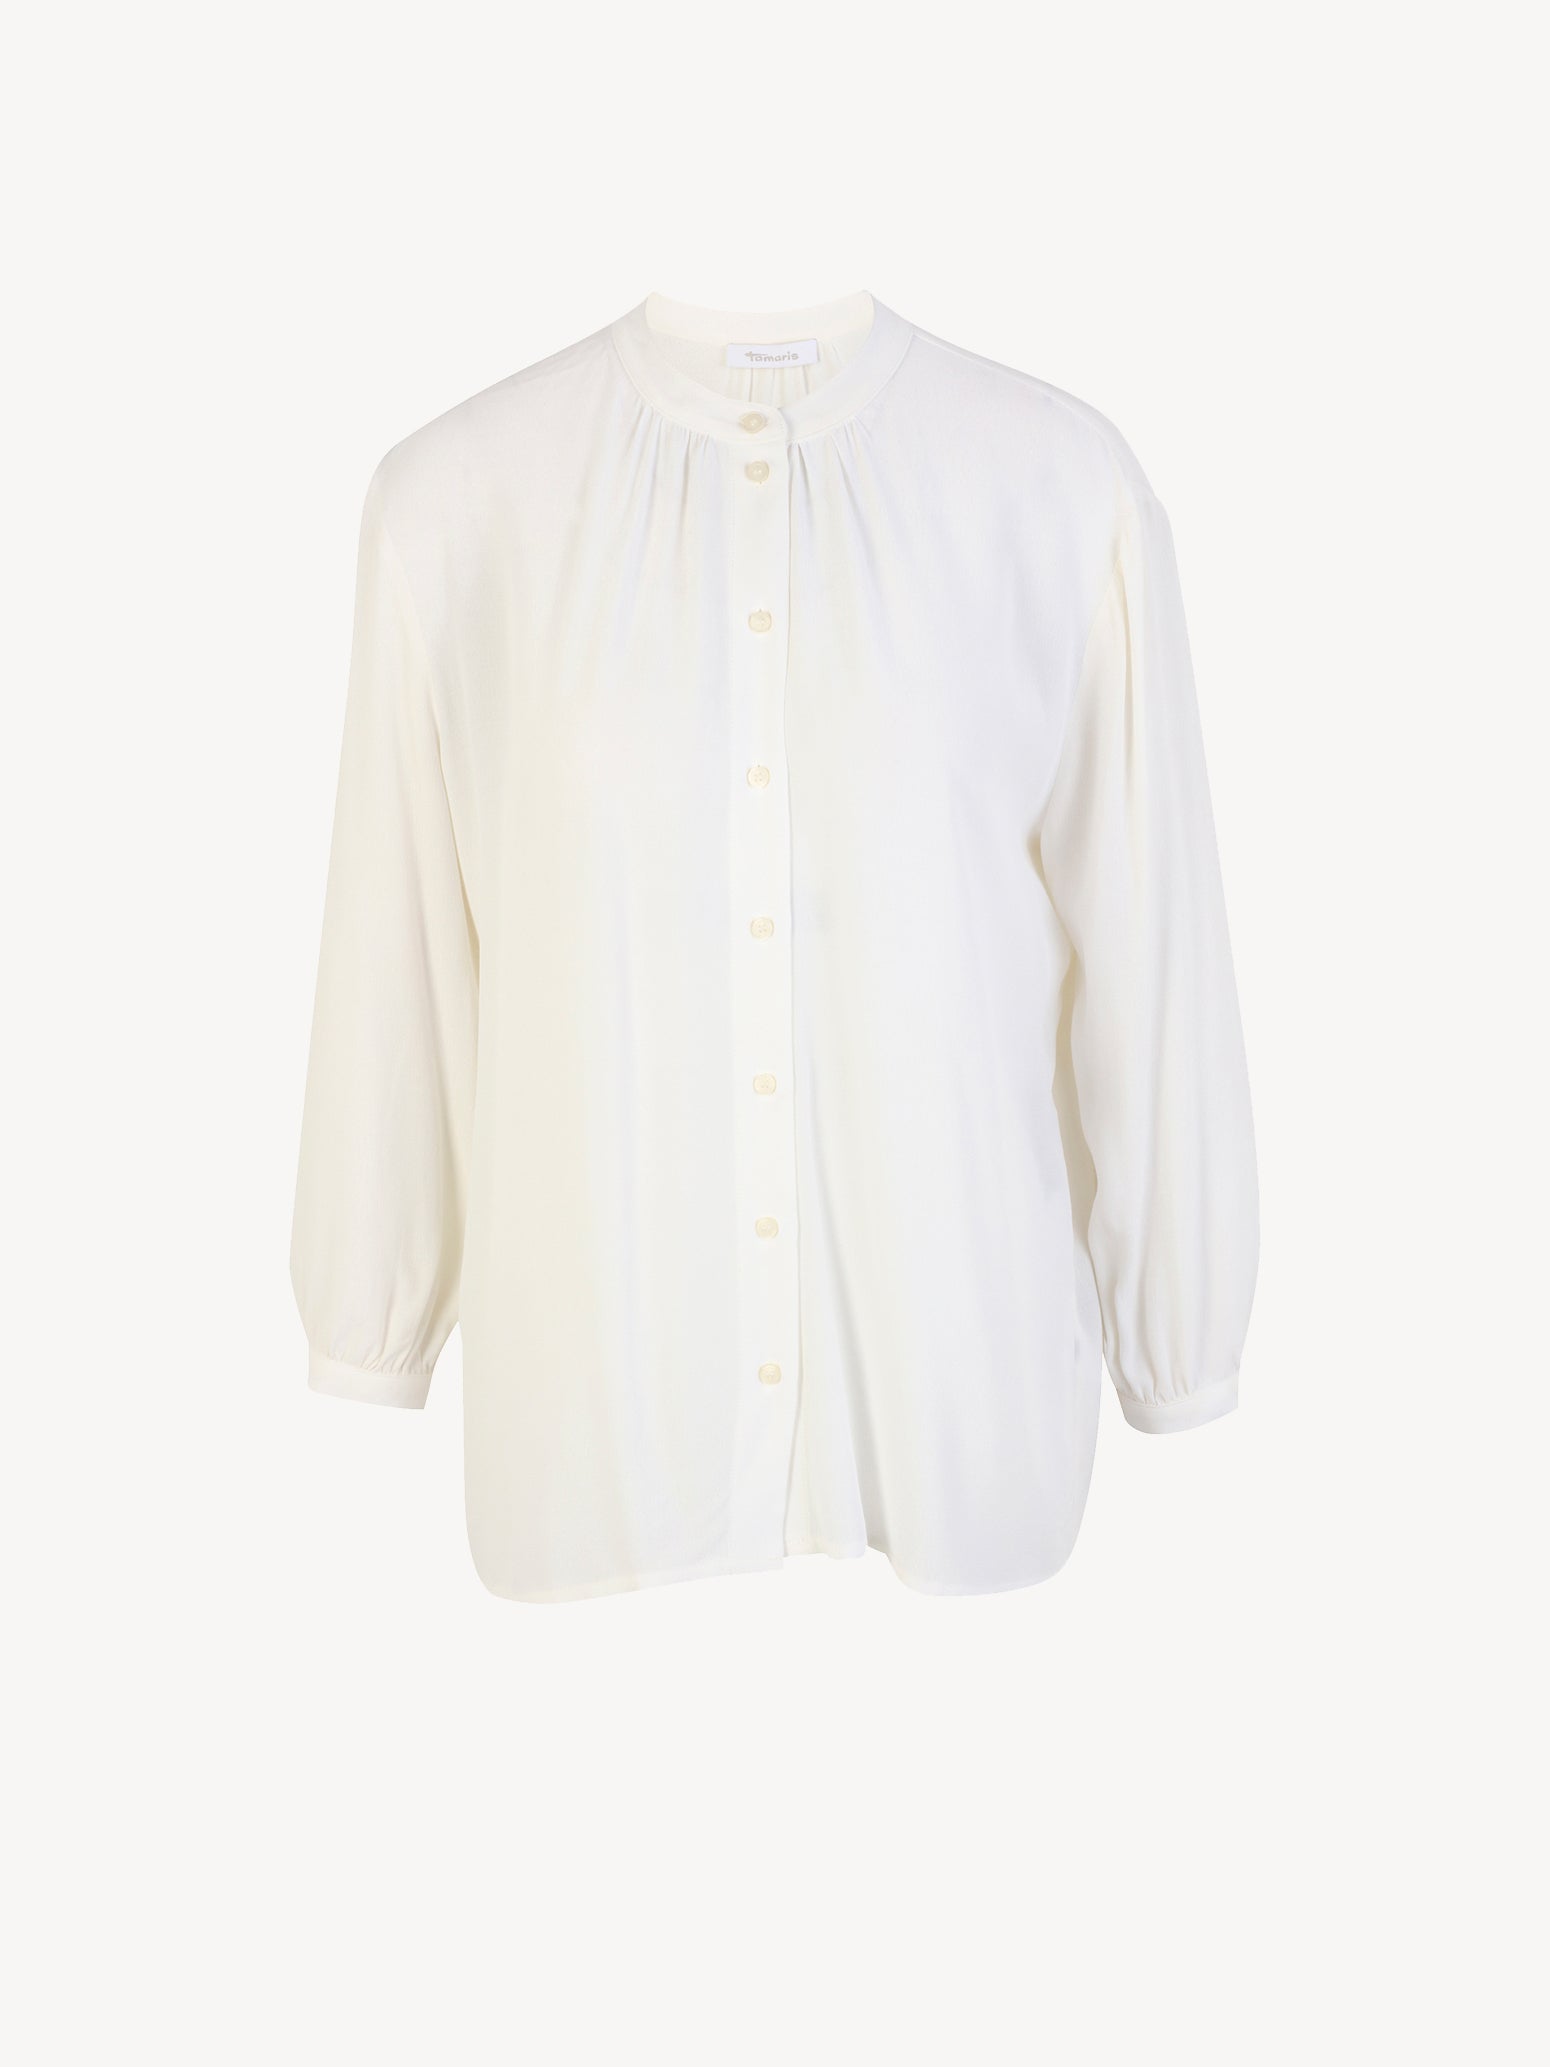 Annecy Standup Collar Blouse in Bright White Blusen Tamaris   